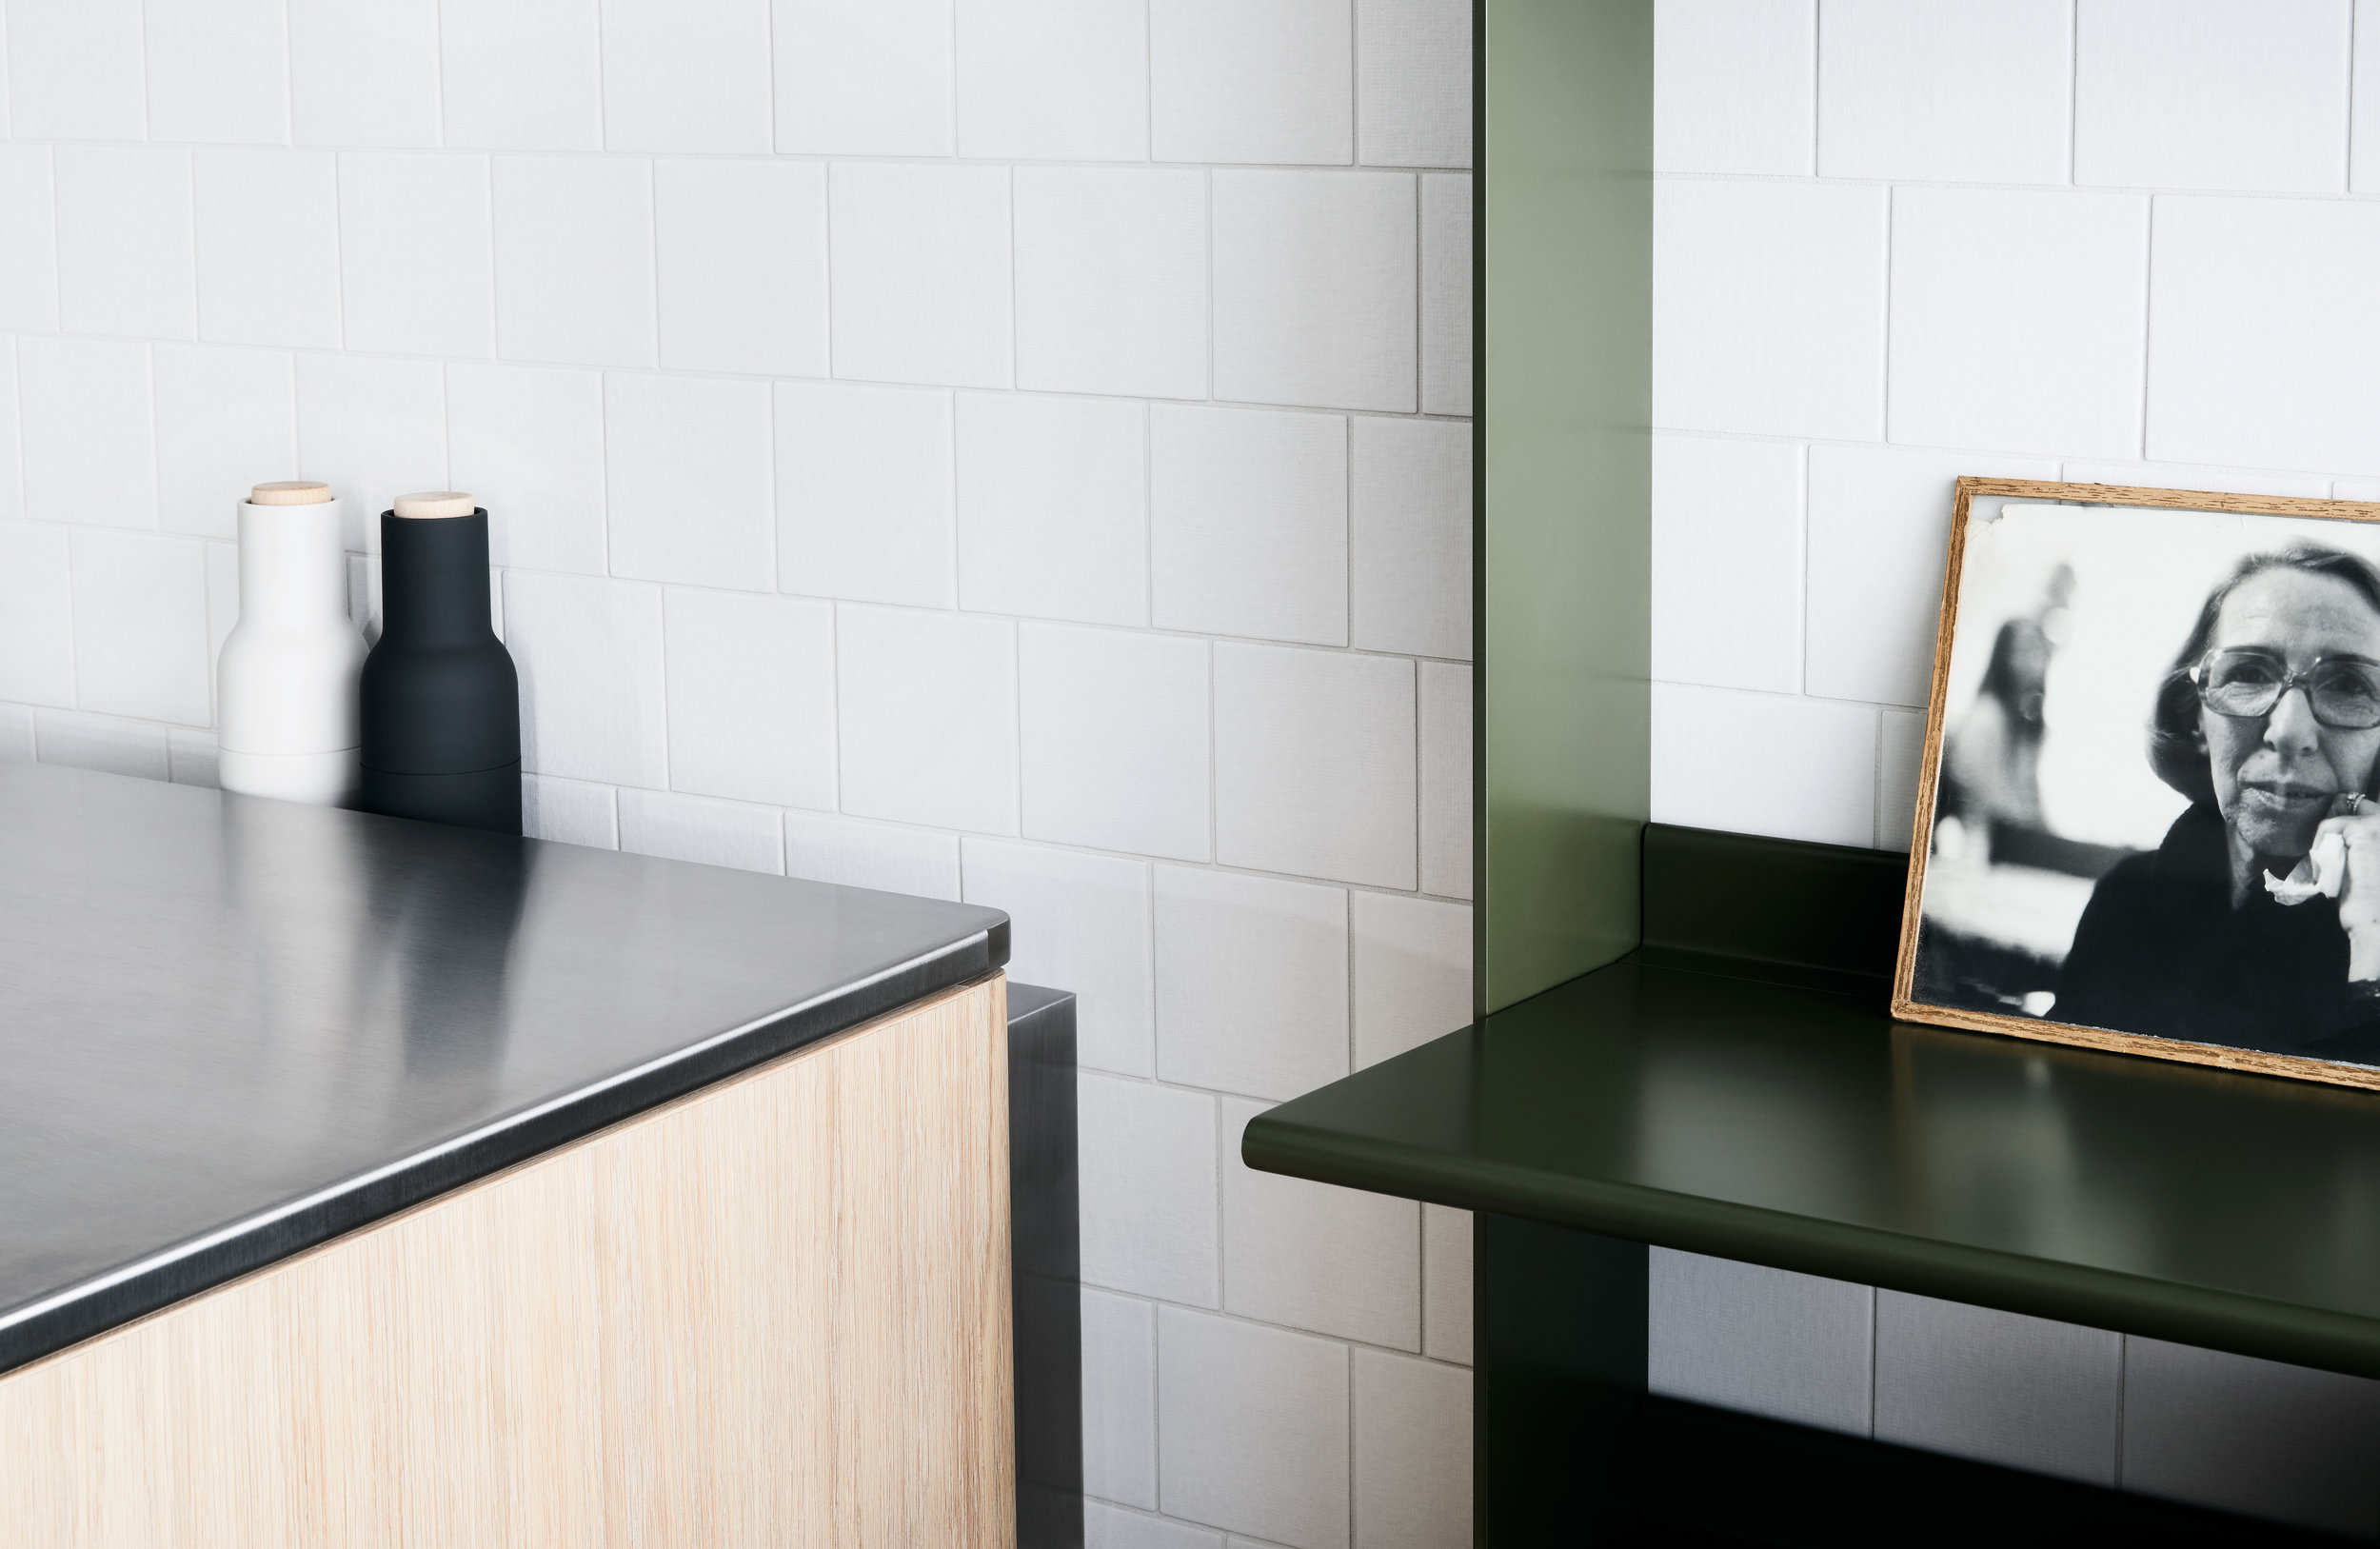 Tableau Cantilever DesignOffice Kitchen System Australia (5).jpg